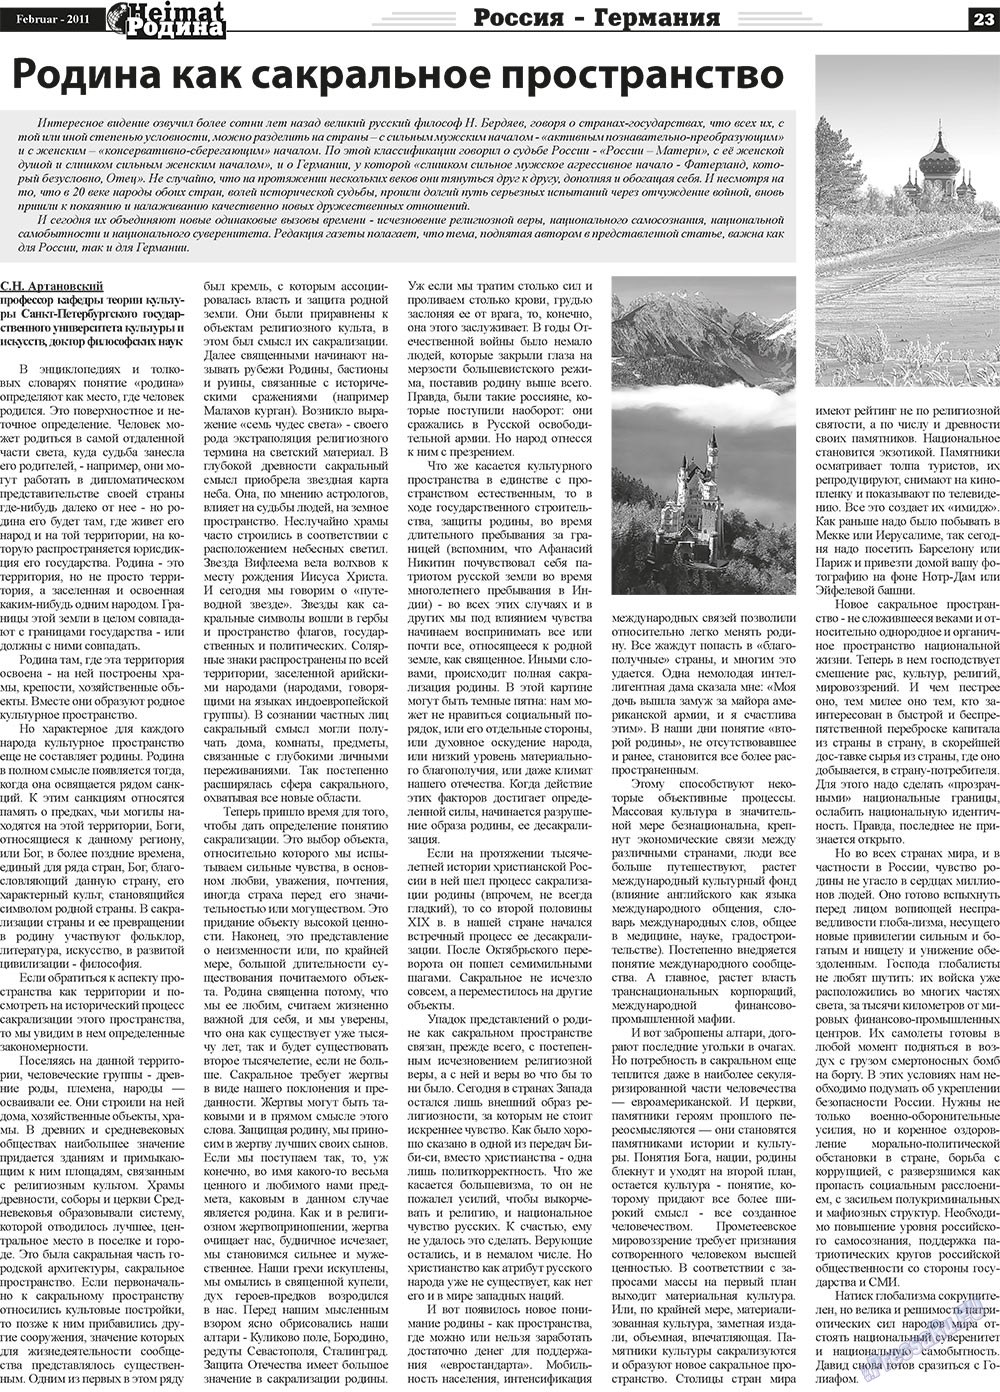 Heimat-Родина, газета. 2011 №2 стр.23